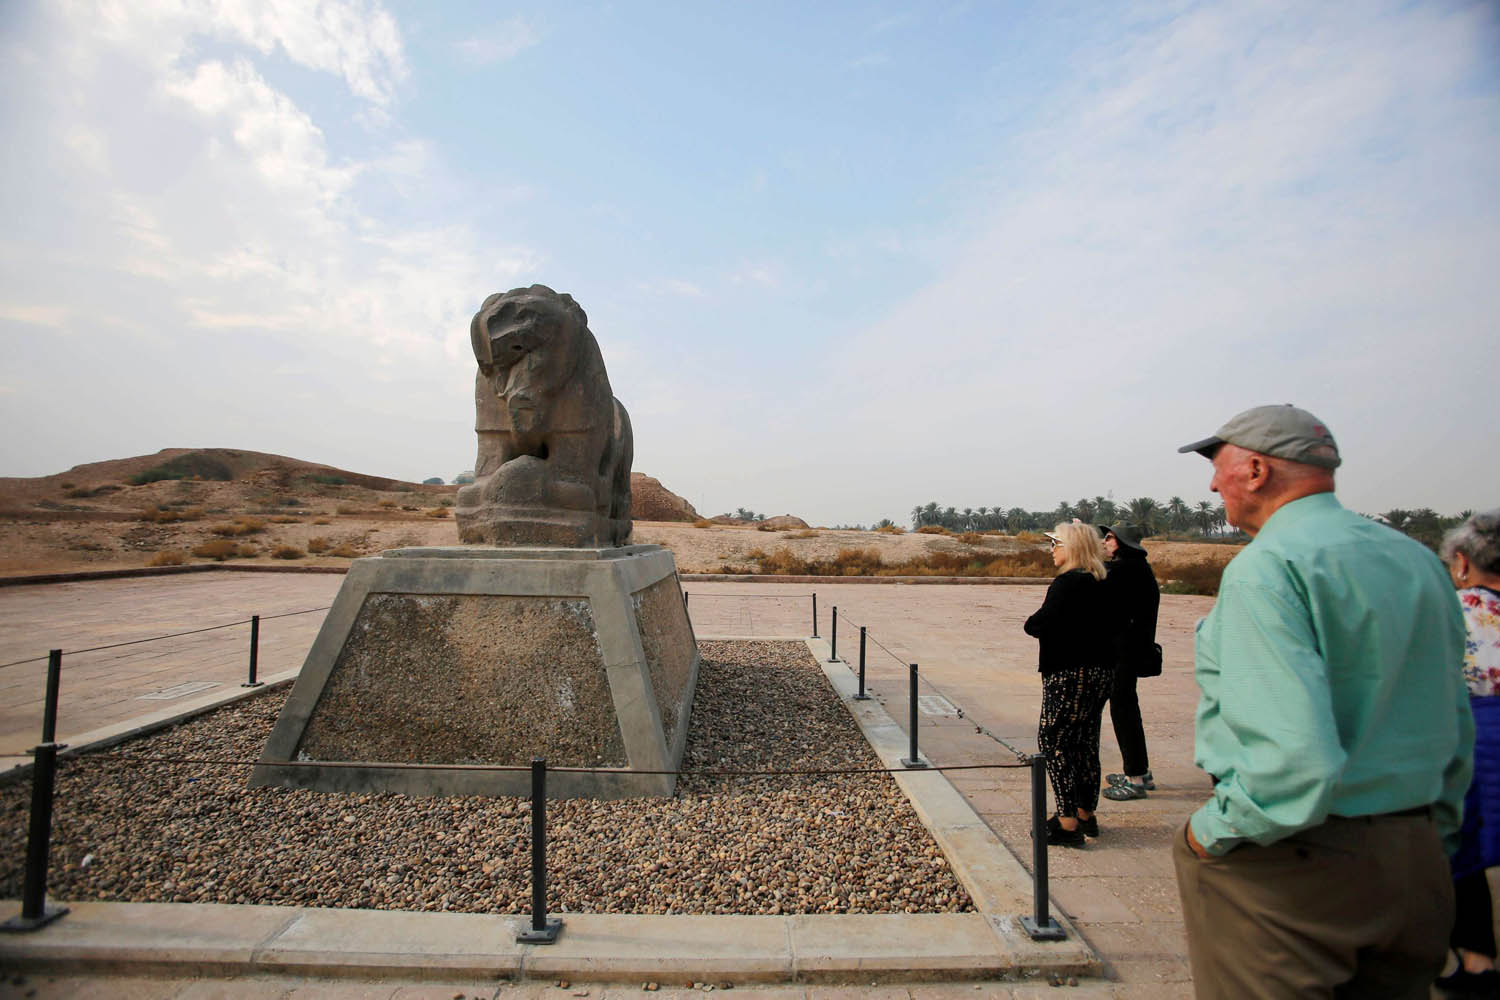 سياح غربيون يزورون أسد بابل جنوب بغداد